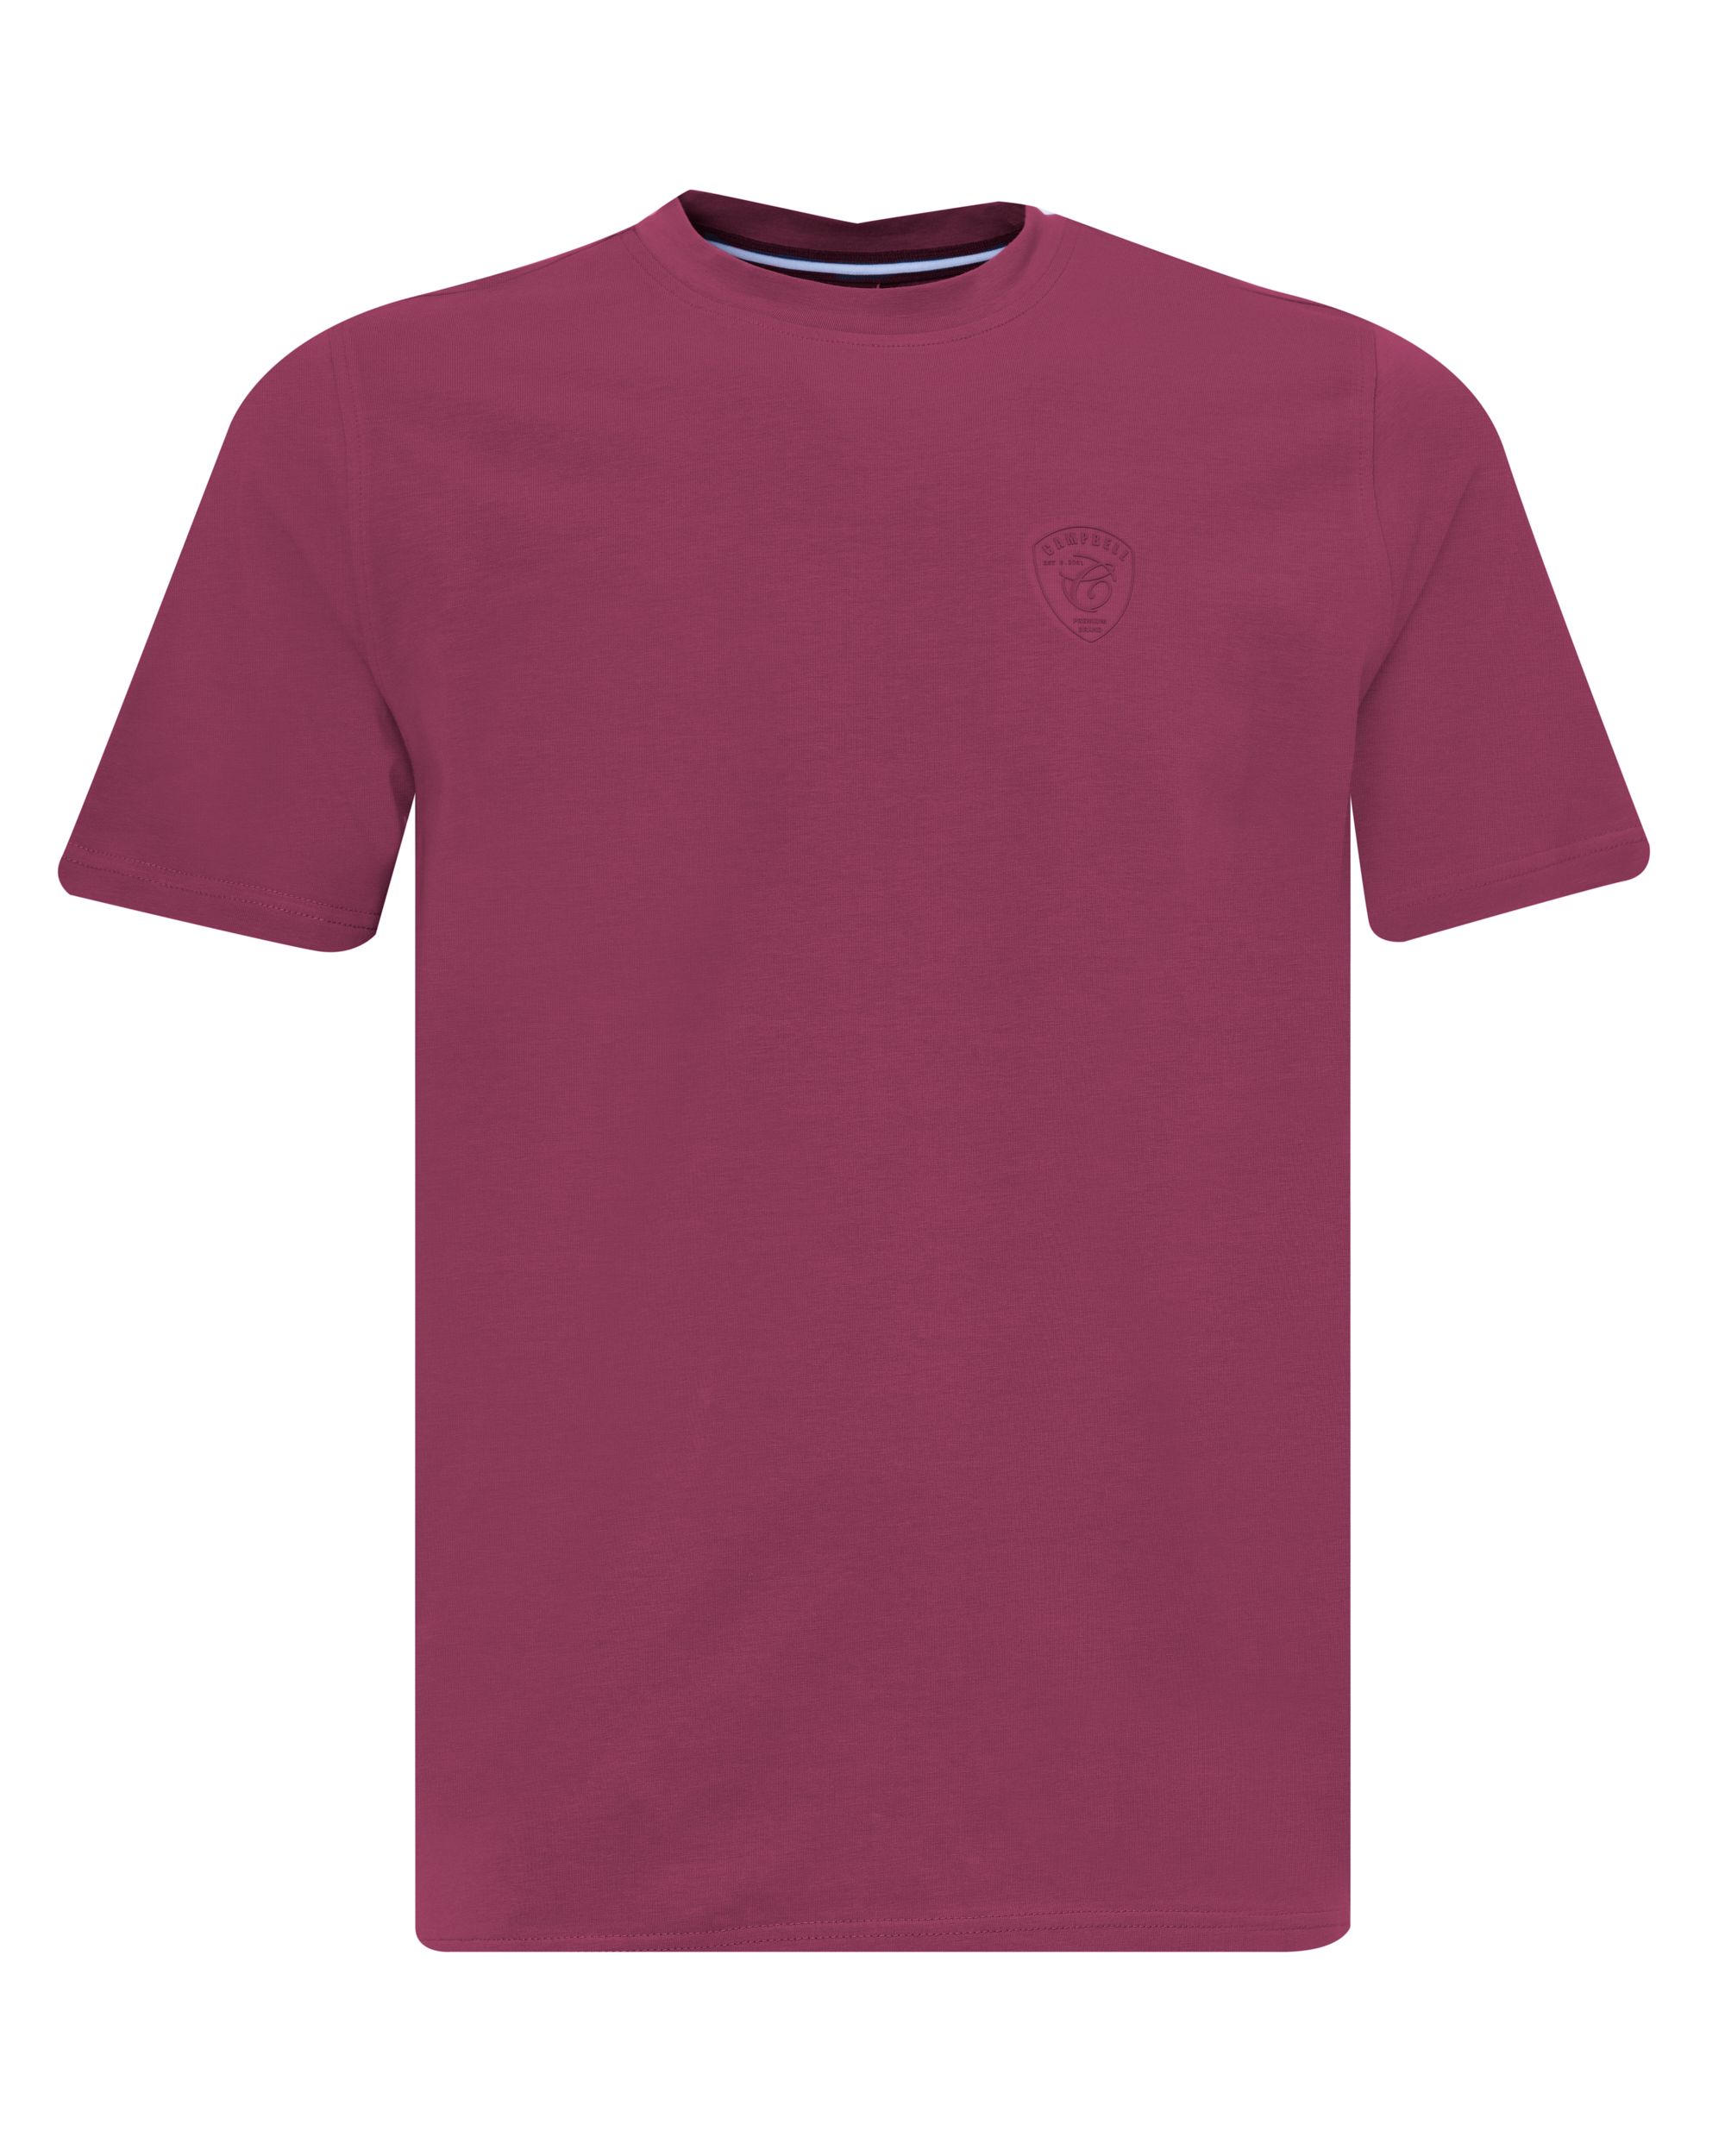 Campbell Classic T-shirt KM Tawny Port 084754-003-L